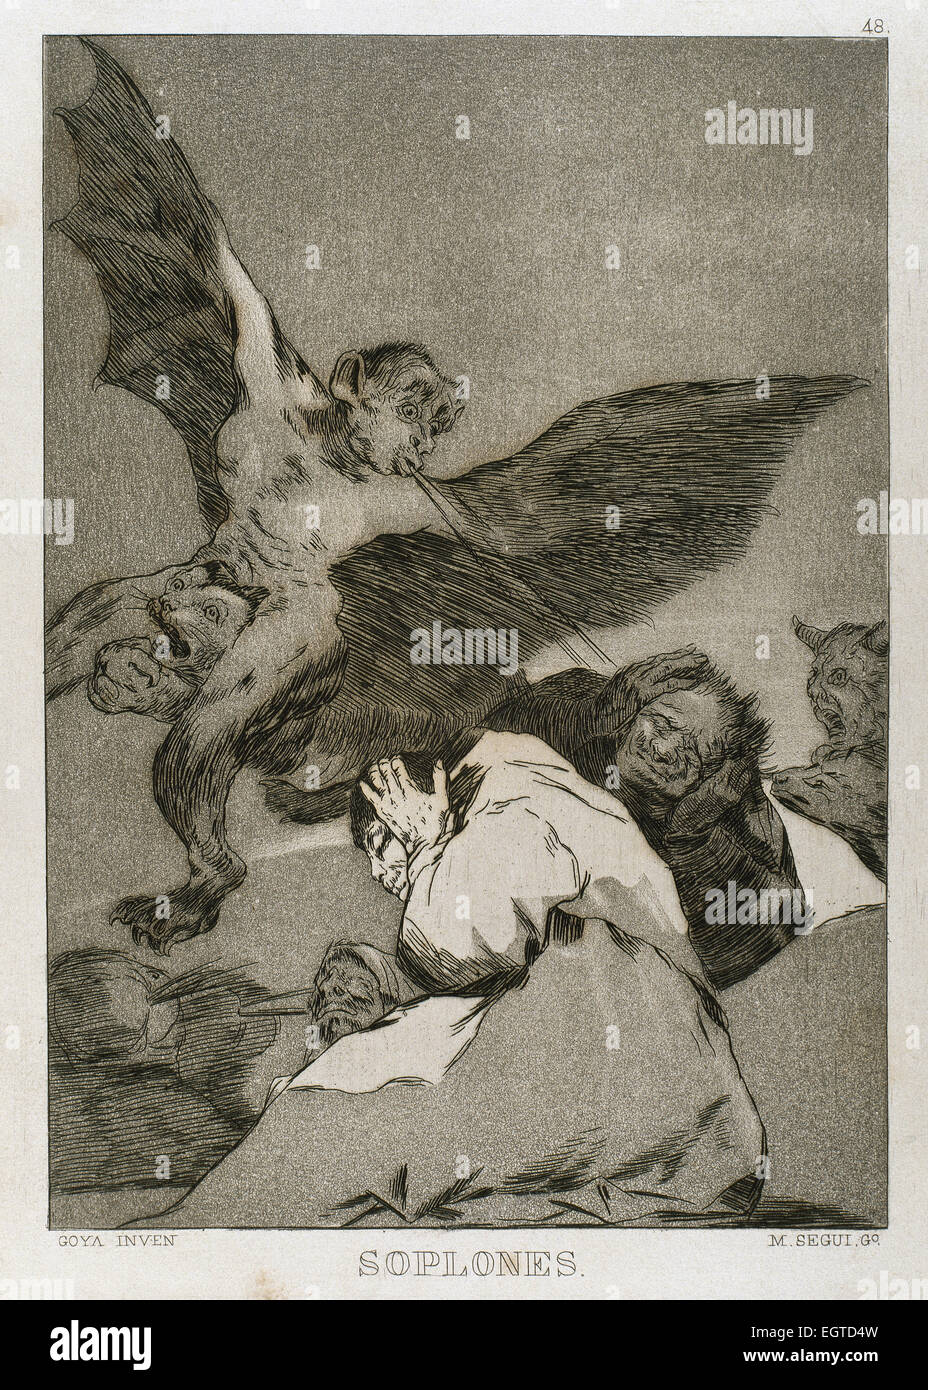 Francisco Goya (1746-1828). Caprices. Plaque 48. Big gusts. Prado Museum. Madrid. Stock Photo